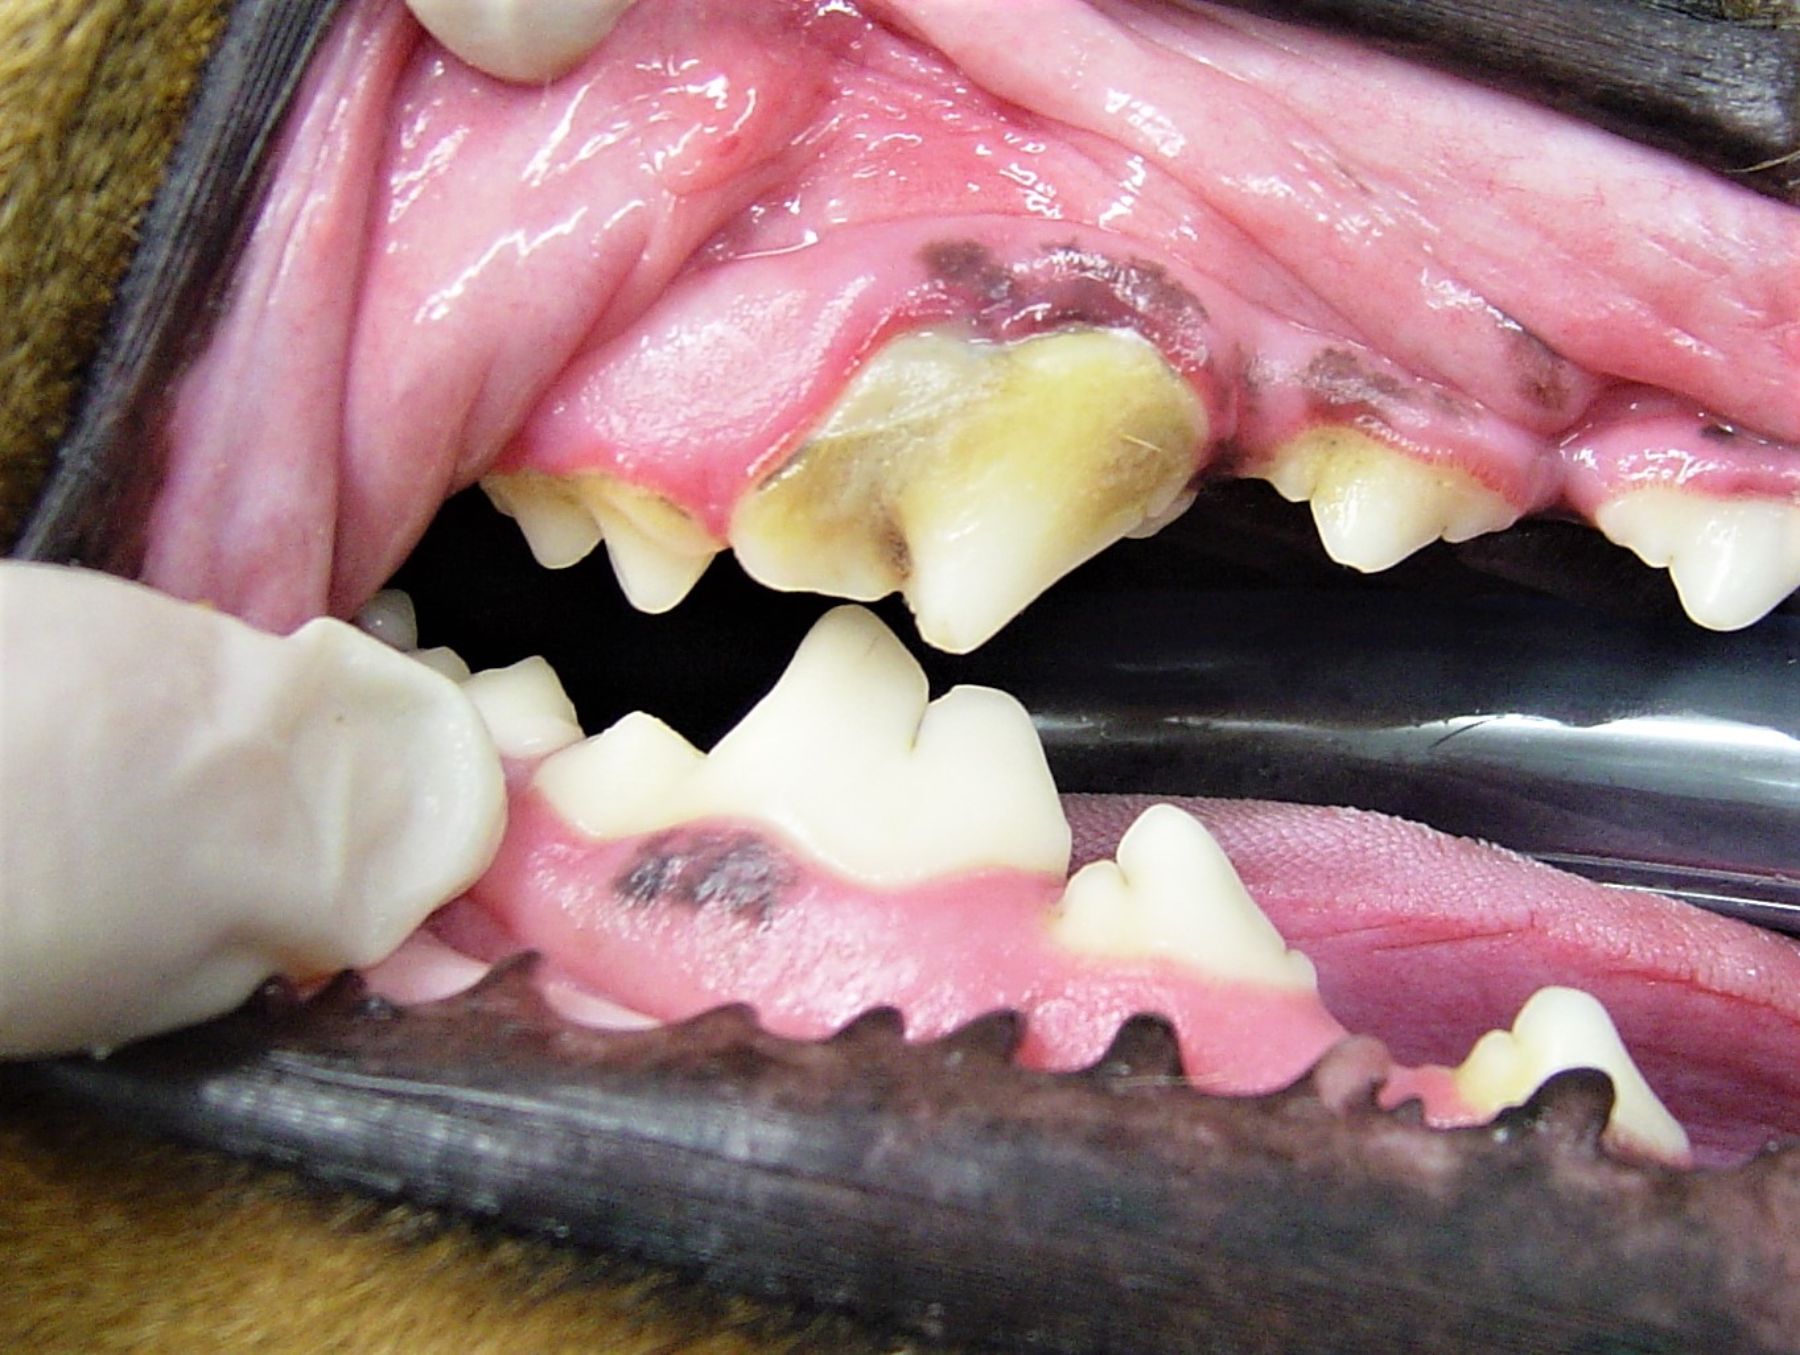 advanced periodontal disease in dogs